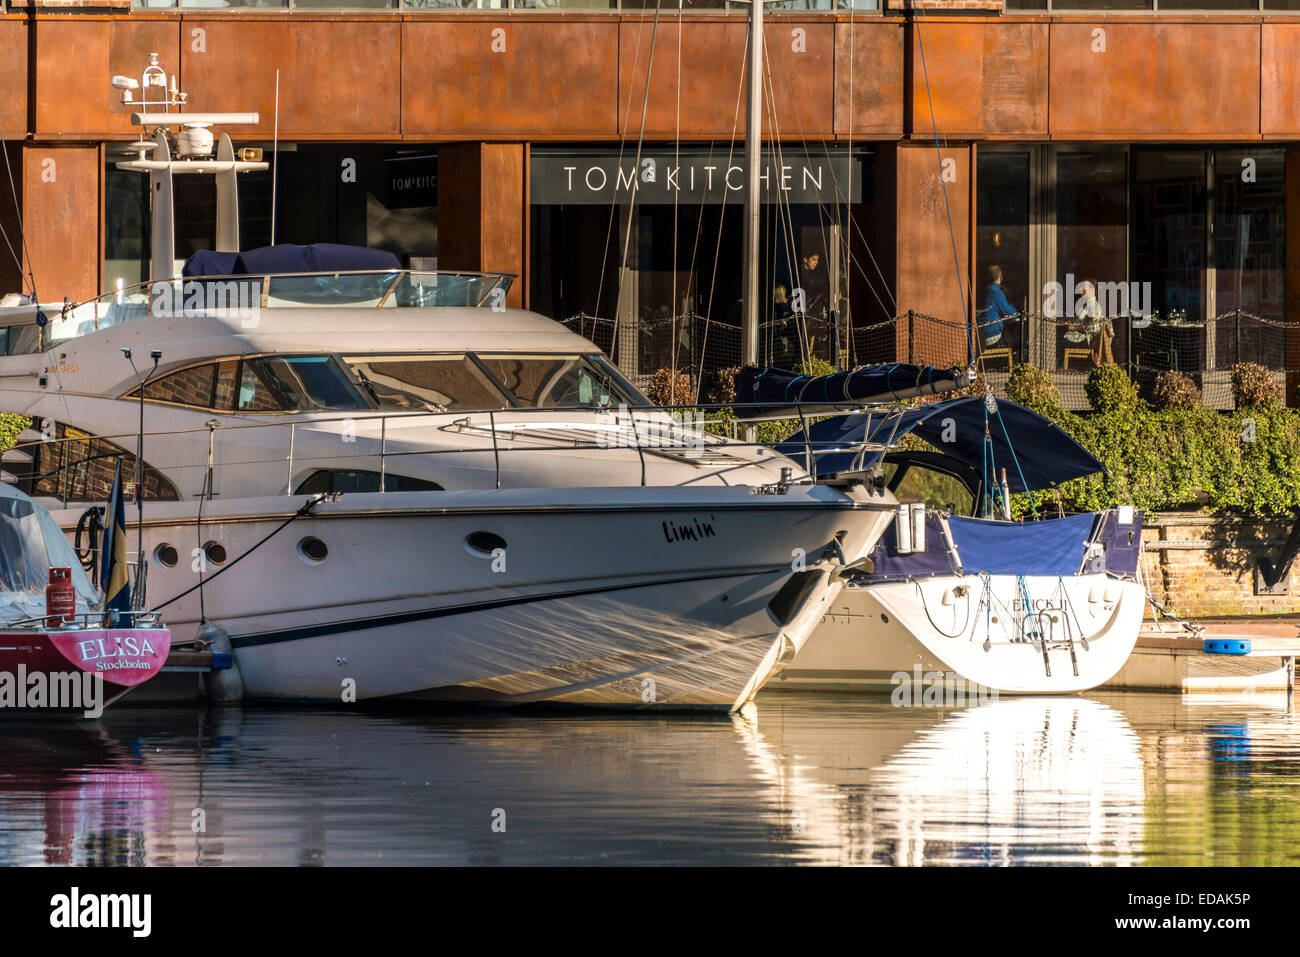 A luxury yacht moored in St Katharine Docks, East London, outside Tom's Kitchen restaurant. Stock Photo